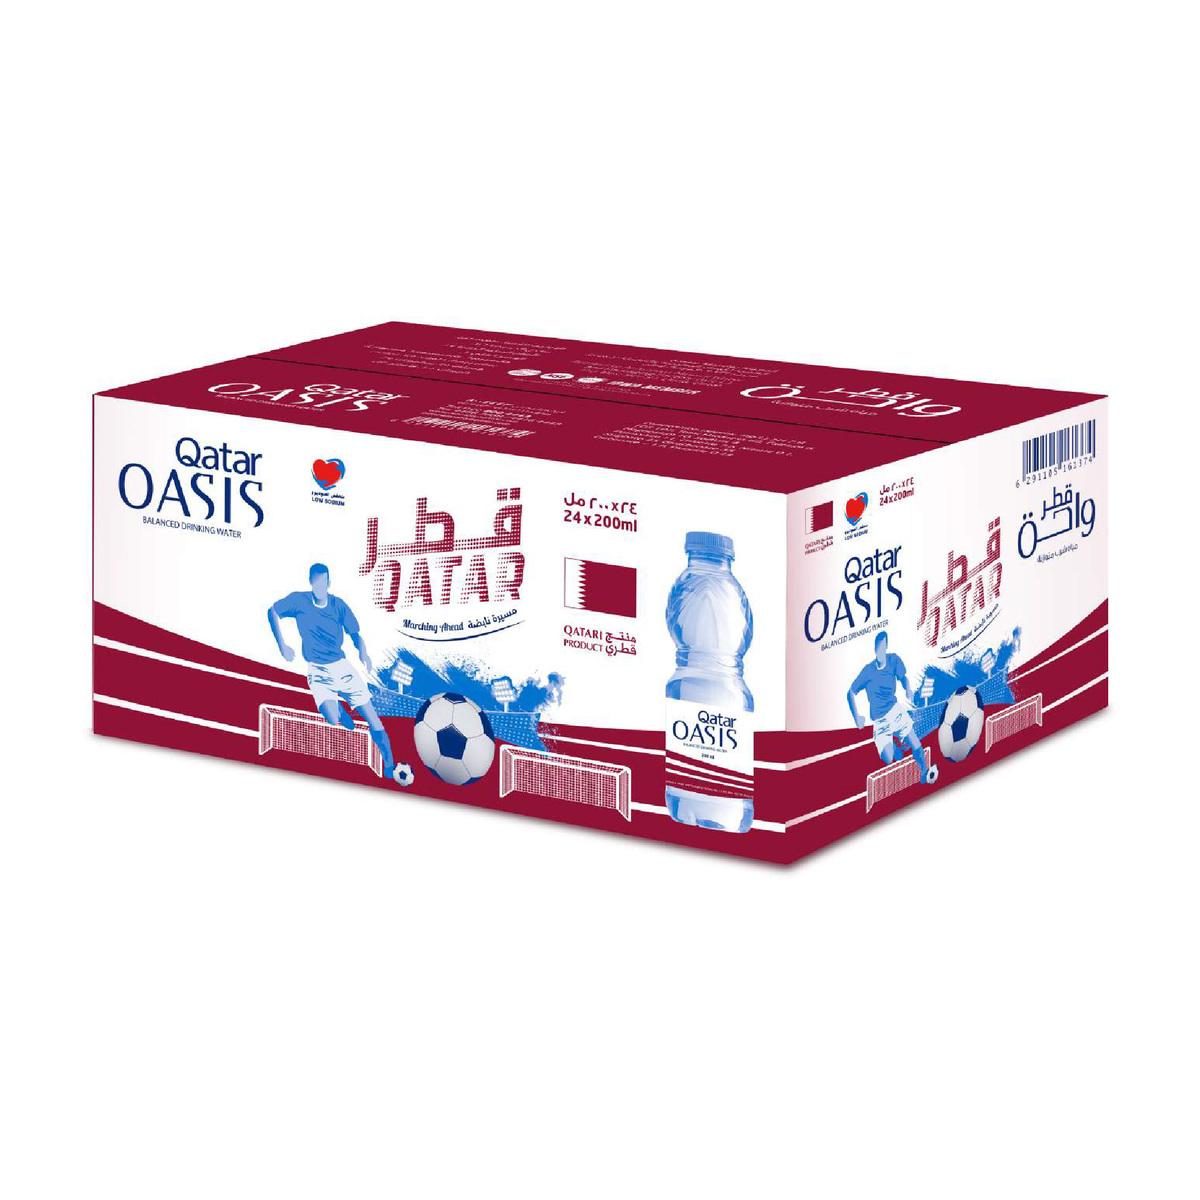 Qatar Oasis Balanced Drinking Water 24 x 200ml